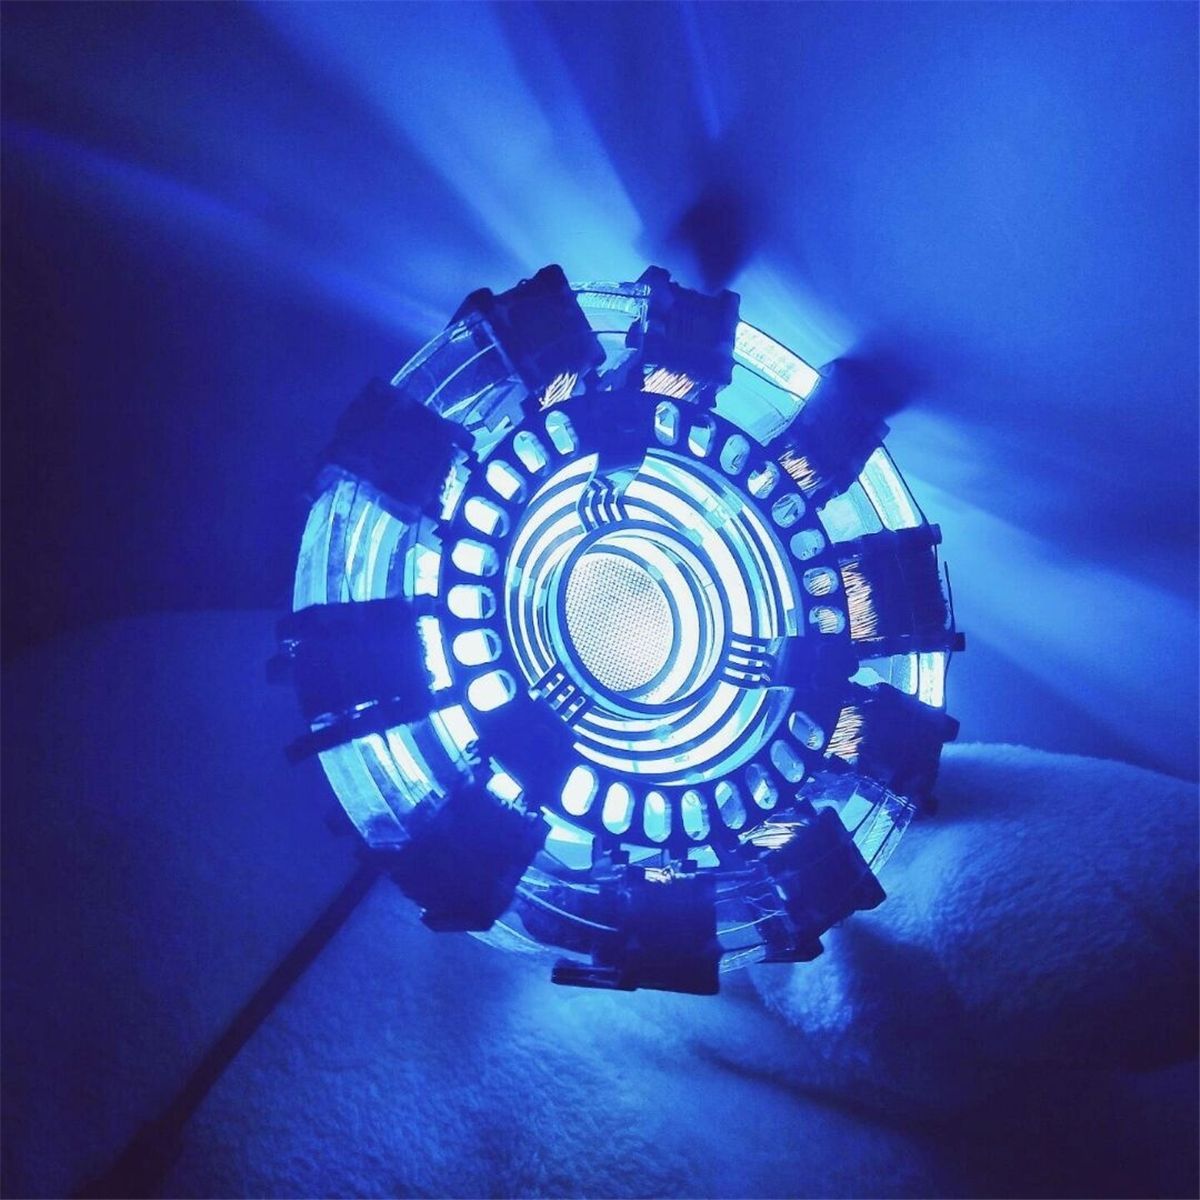 MK1-Acrylic-Tony-DIY-Arc-Reactor-Lamp-Arcylic-Kit-Illuminant-LED-Flash-Light-Set-1420733